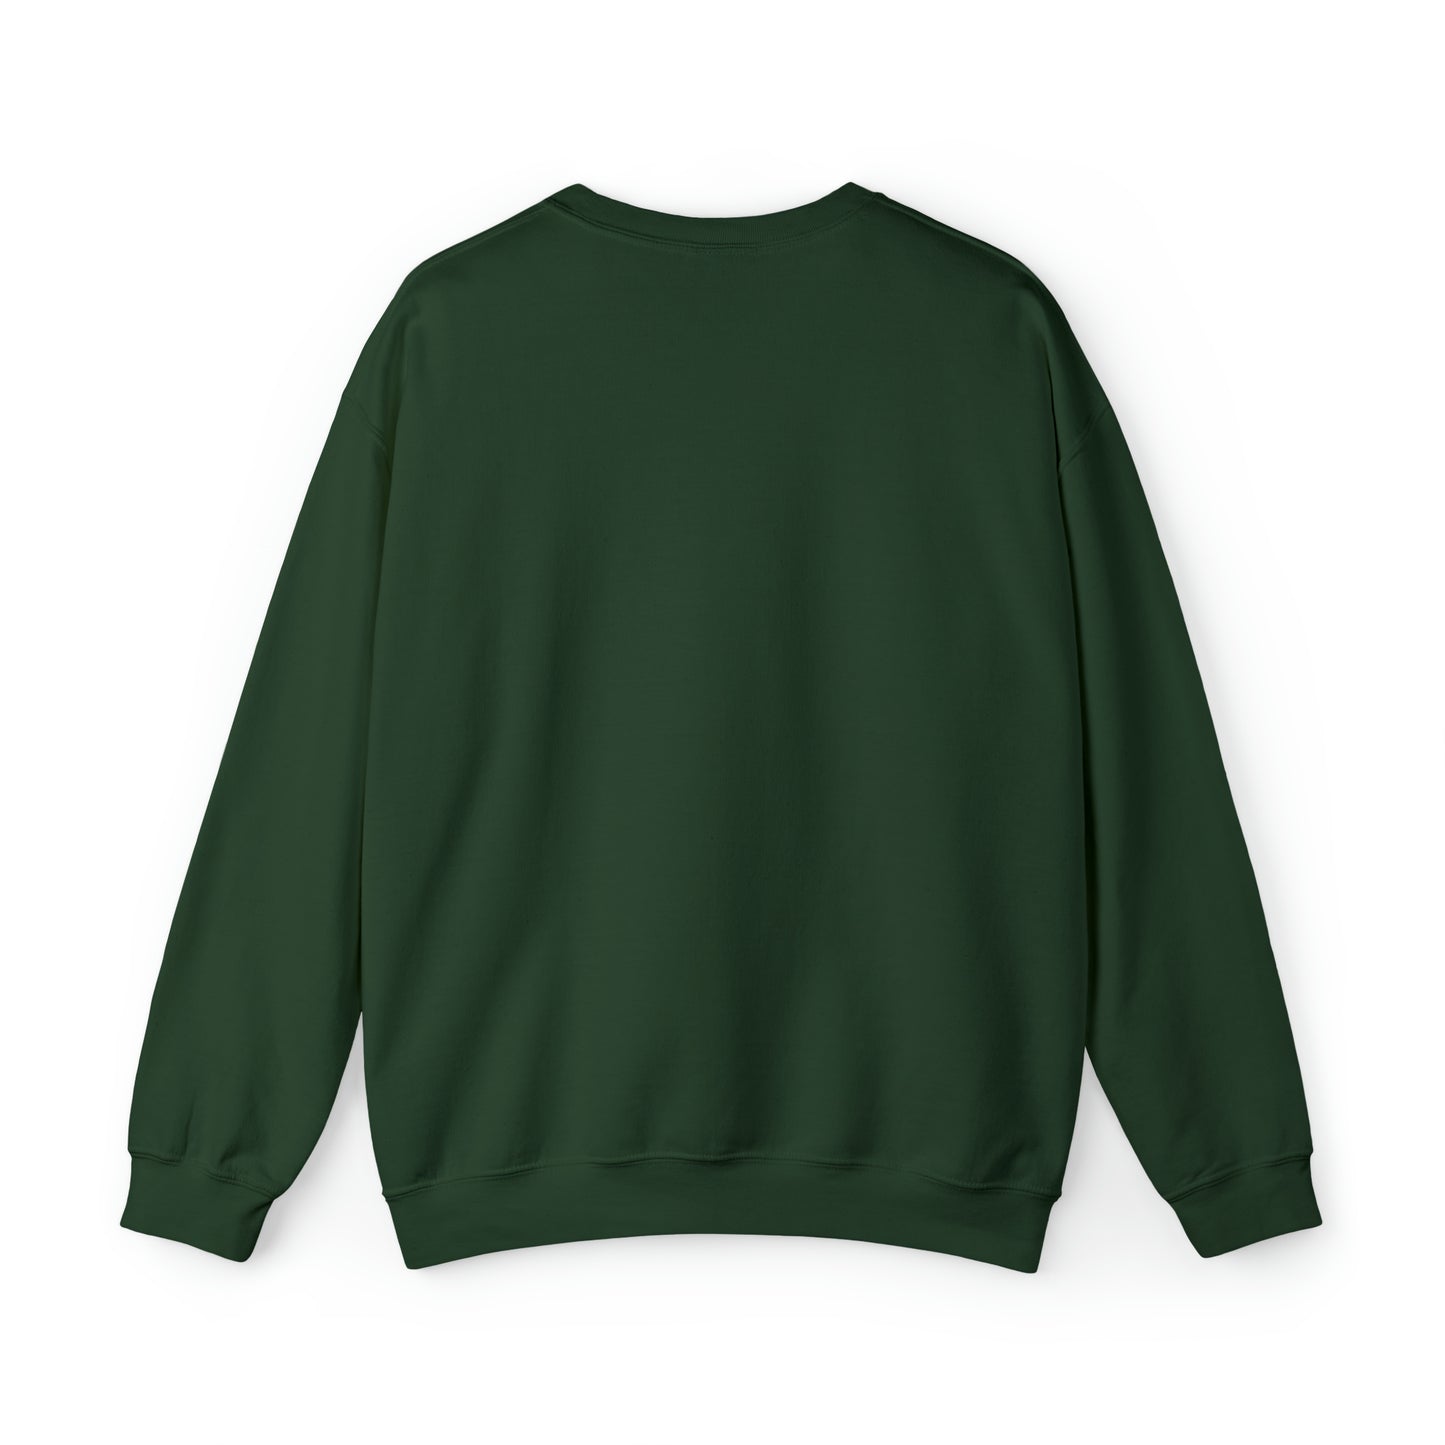 Santa Golf’s Crewneck Sweatshirt